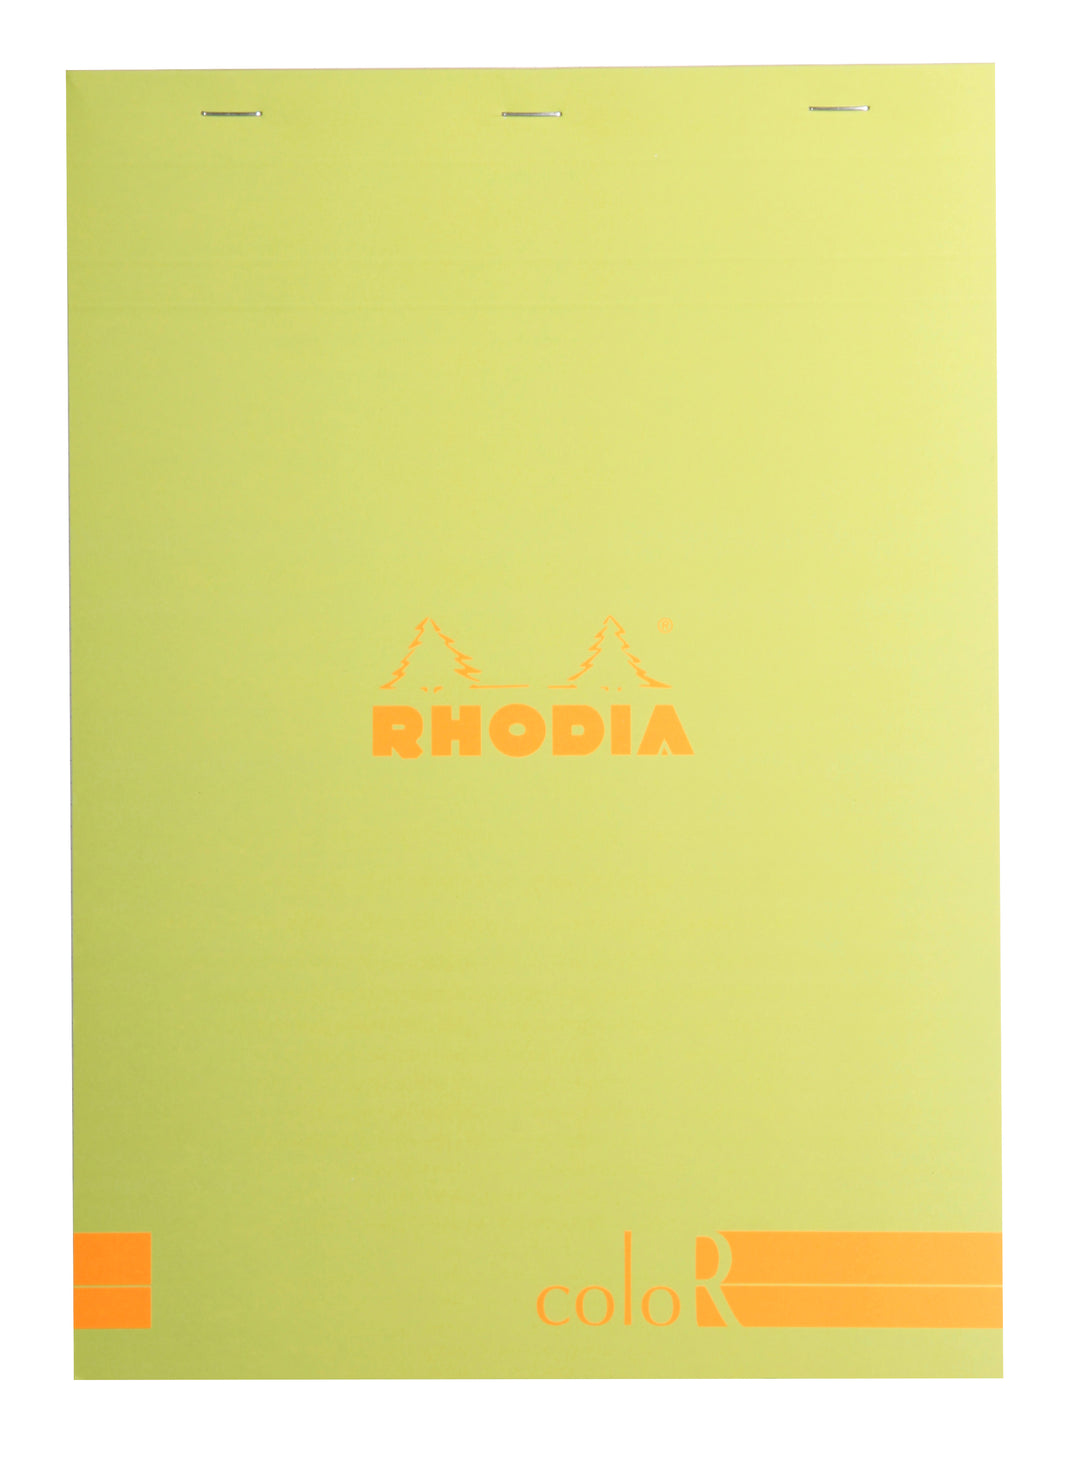 Rhodia Basics coloR Stapled Line Ruled Notepad - No. 12